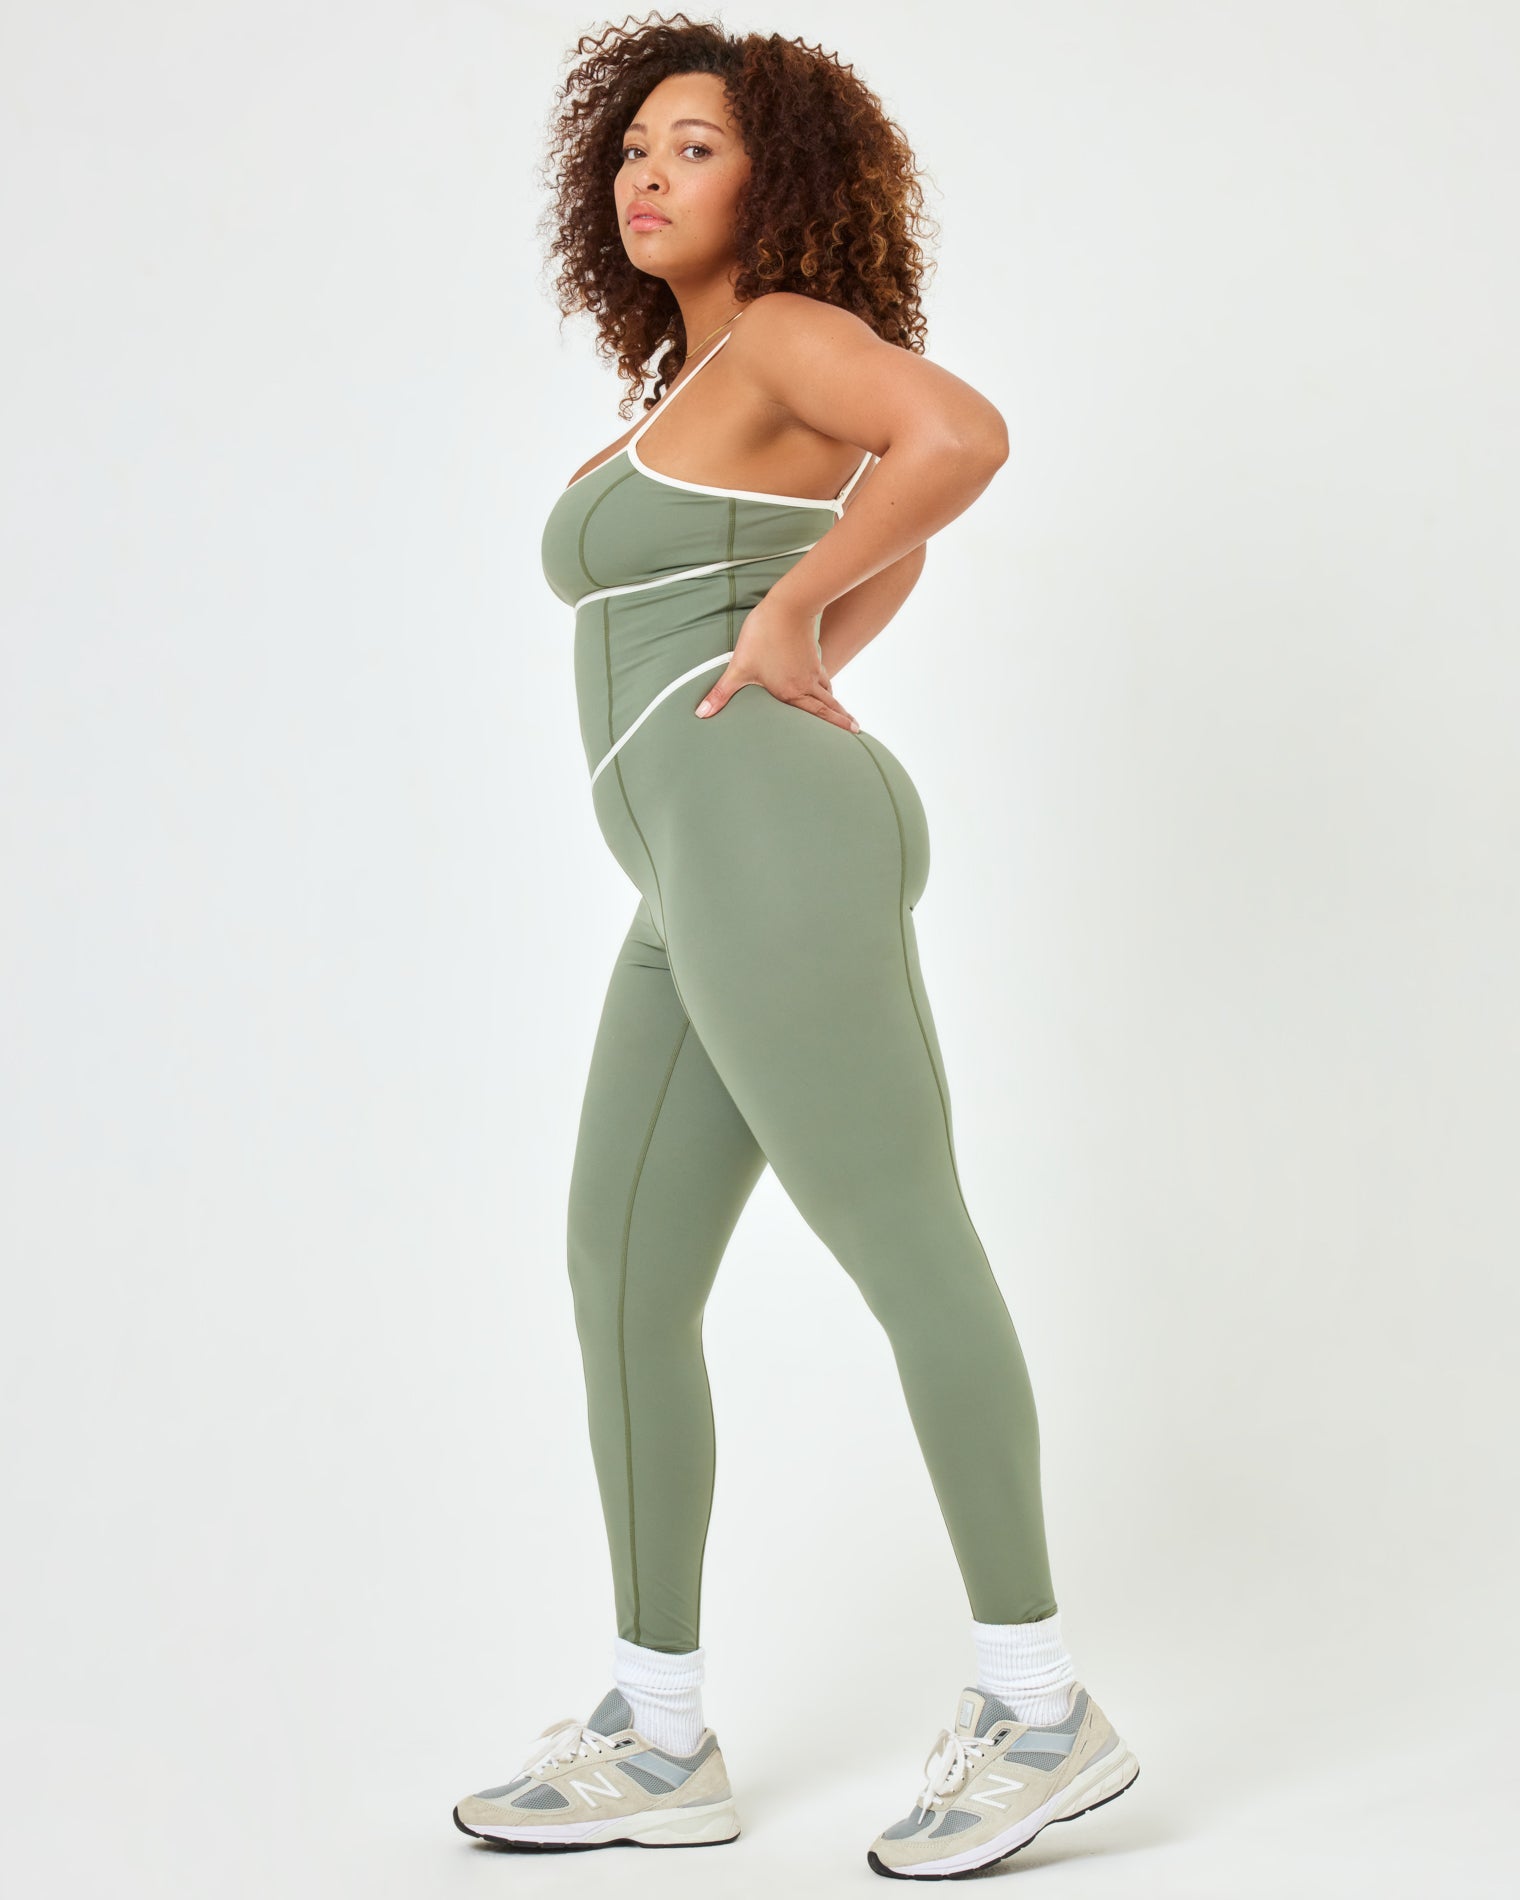 Ace Jumpsuit - Fairway Fairway | Model: Amber (size: XL)